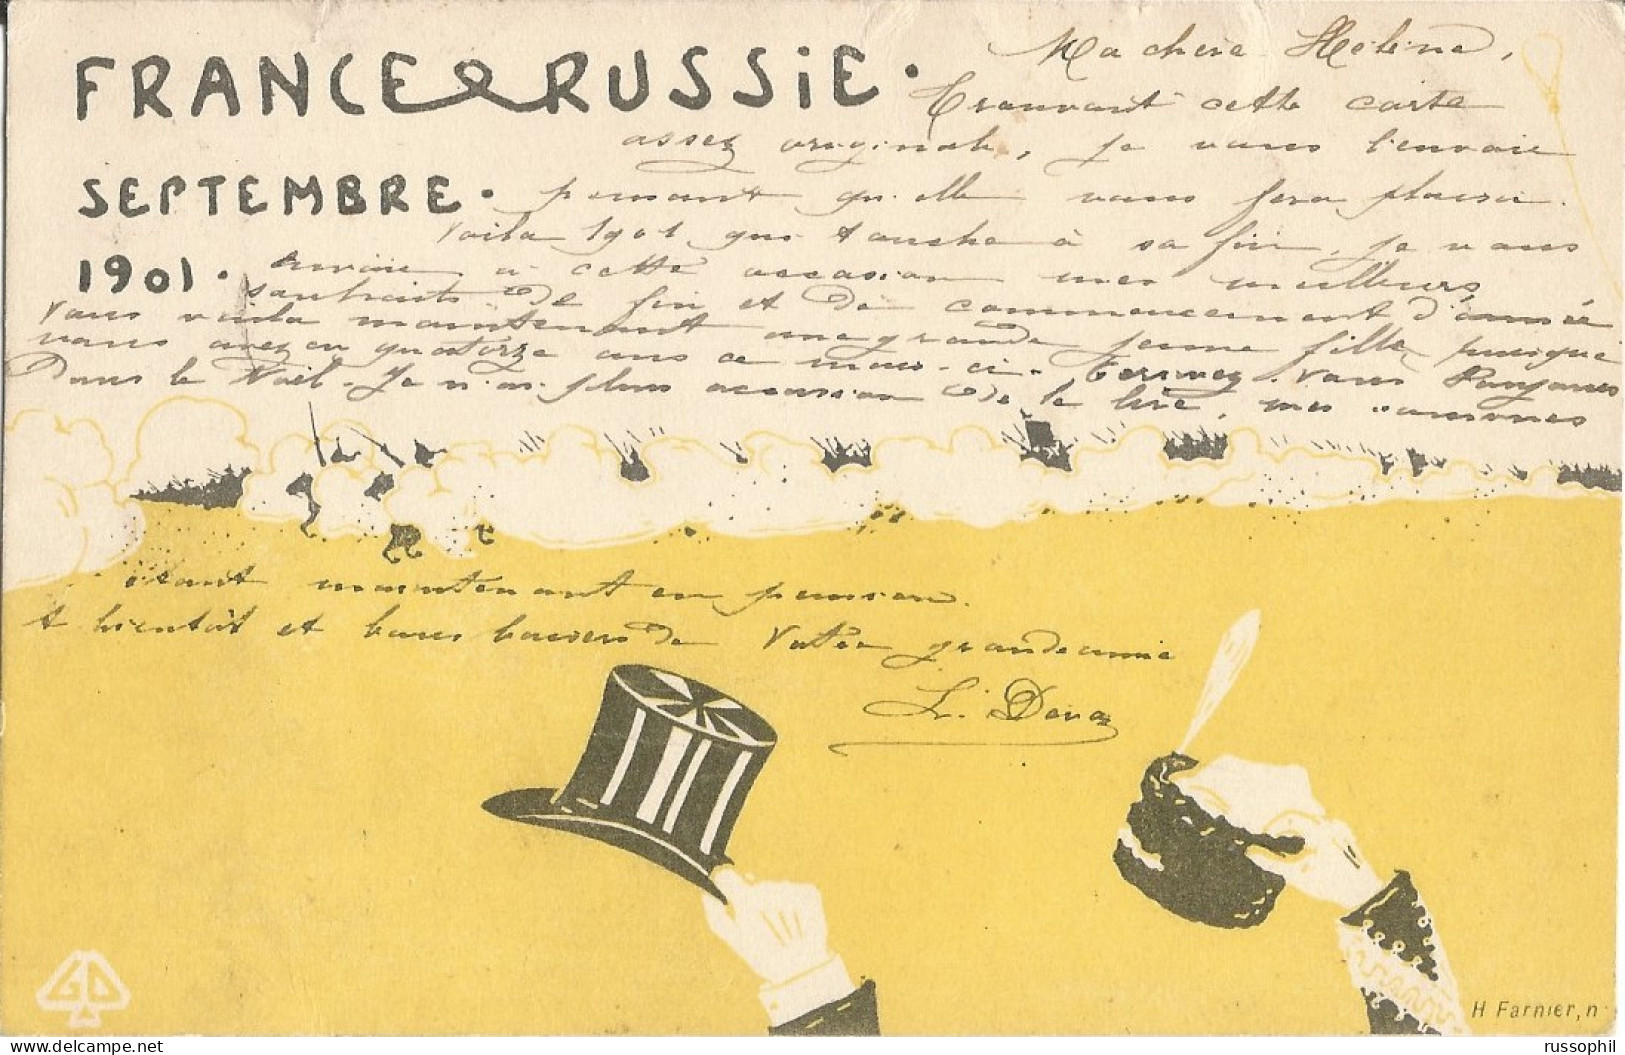 FRANCO RUSSIAN ALLIANCE - FRANCE RUSSIE SEPTEMBRE 1901 - H. FARNIER N° 6 - 1901 - Ereignisse